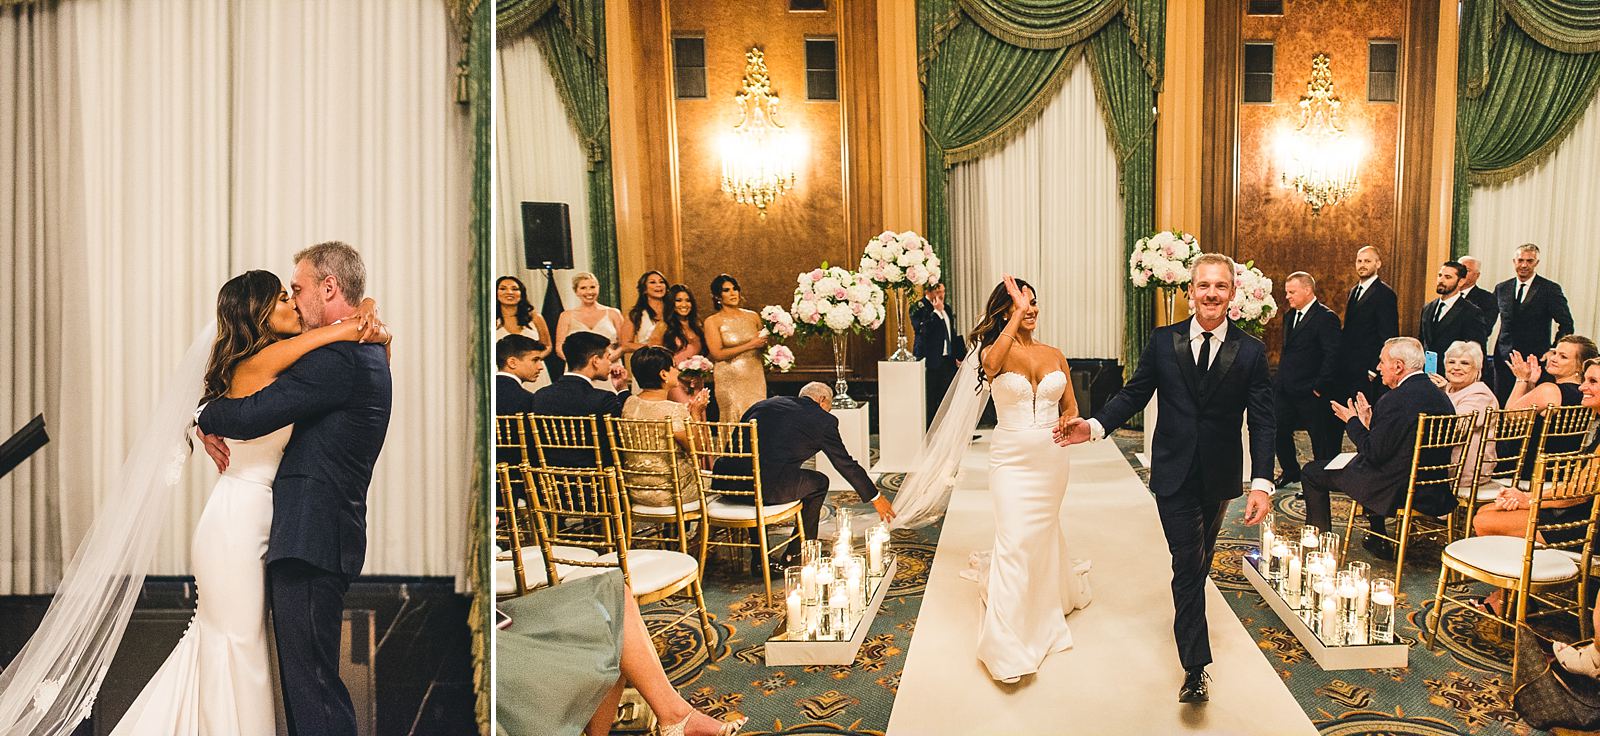 34 chicago upscale wedding inspiration - Intercontinental Chicago Hotel Wedding // Lili + Danny